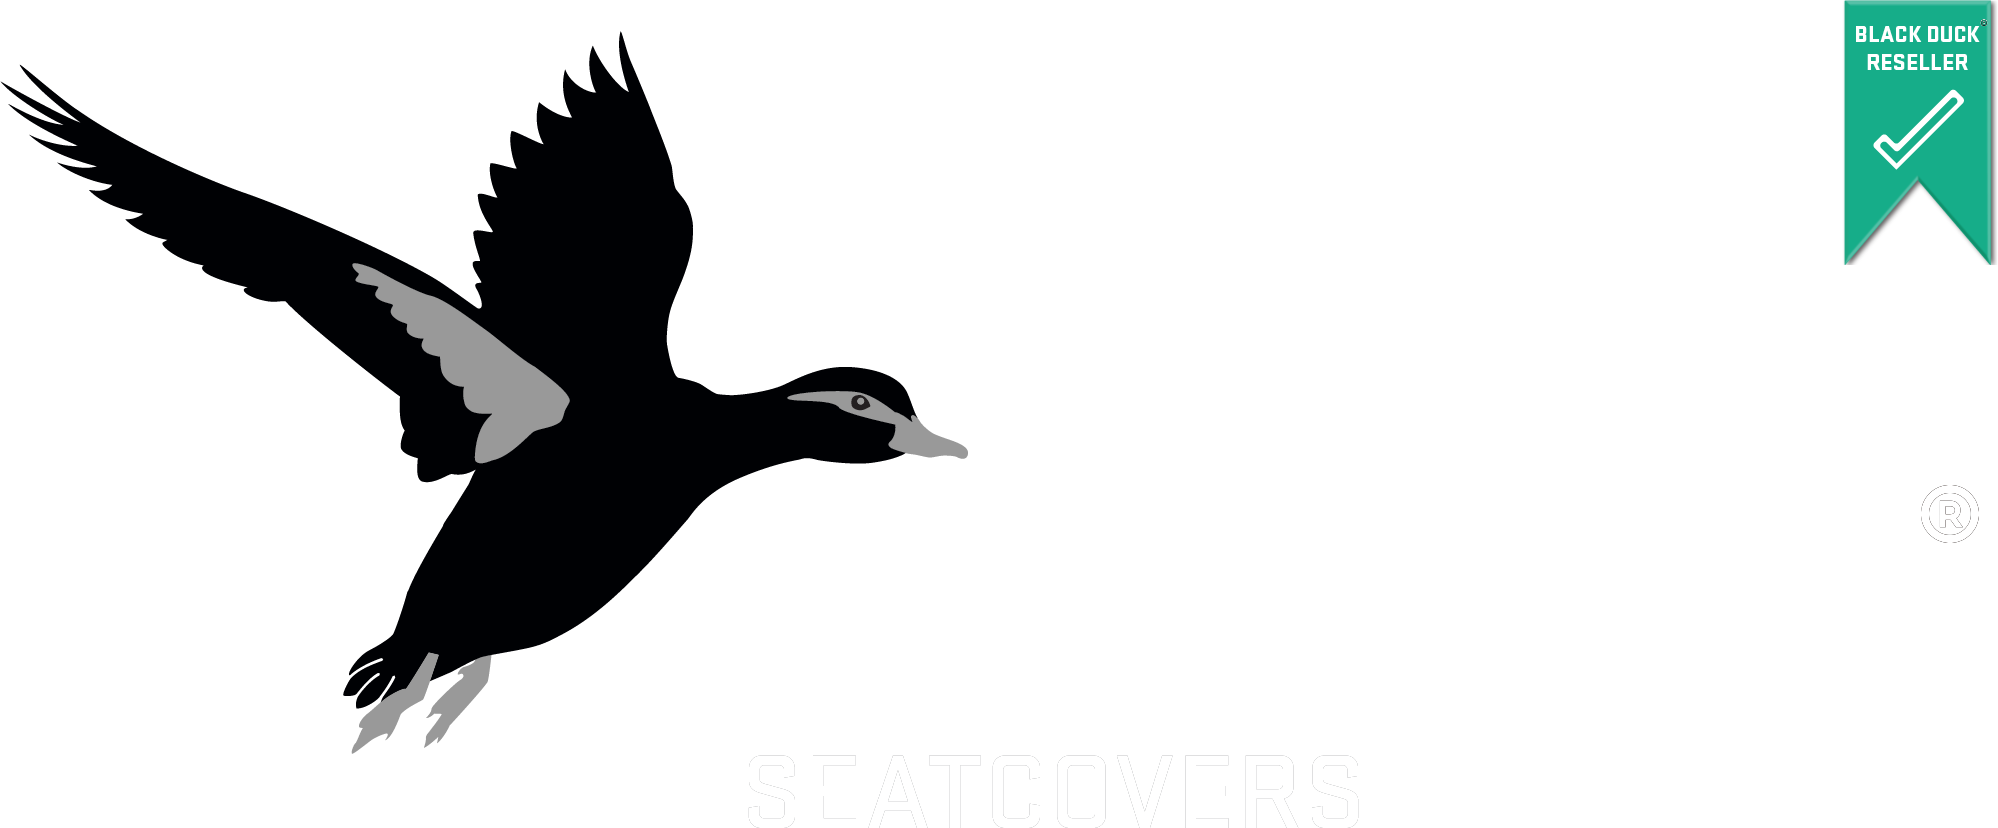 Black Duck Reseller Logo 